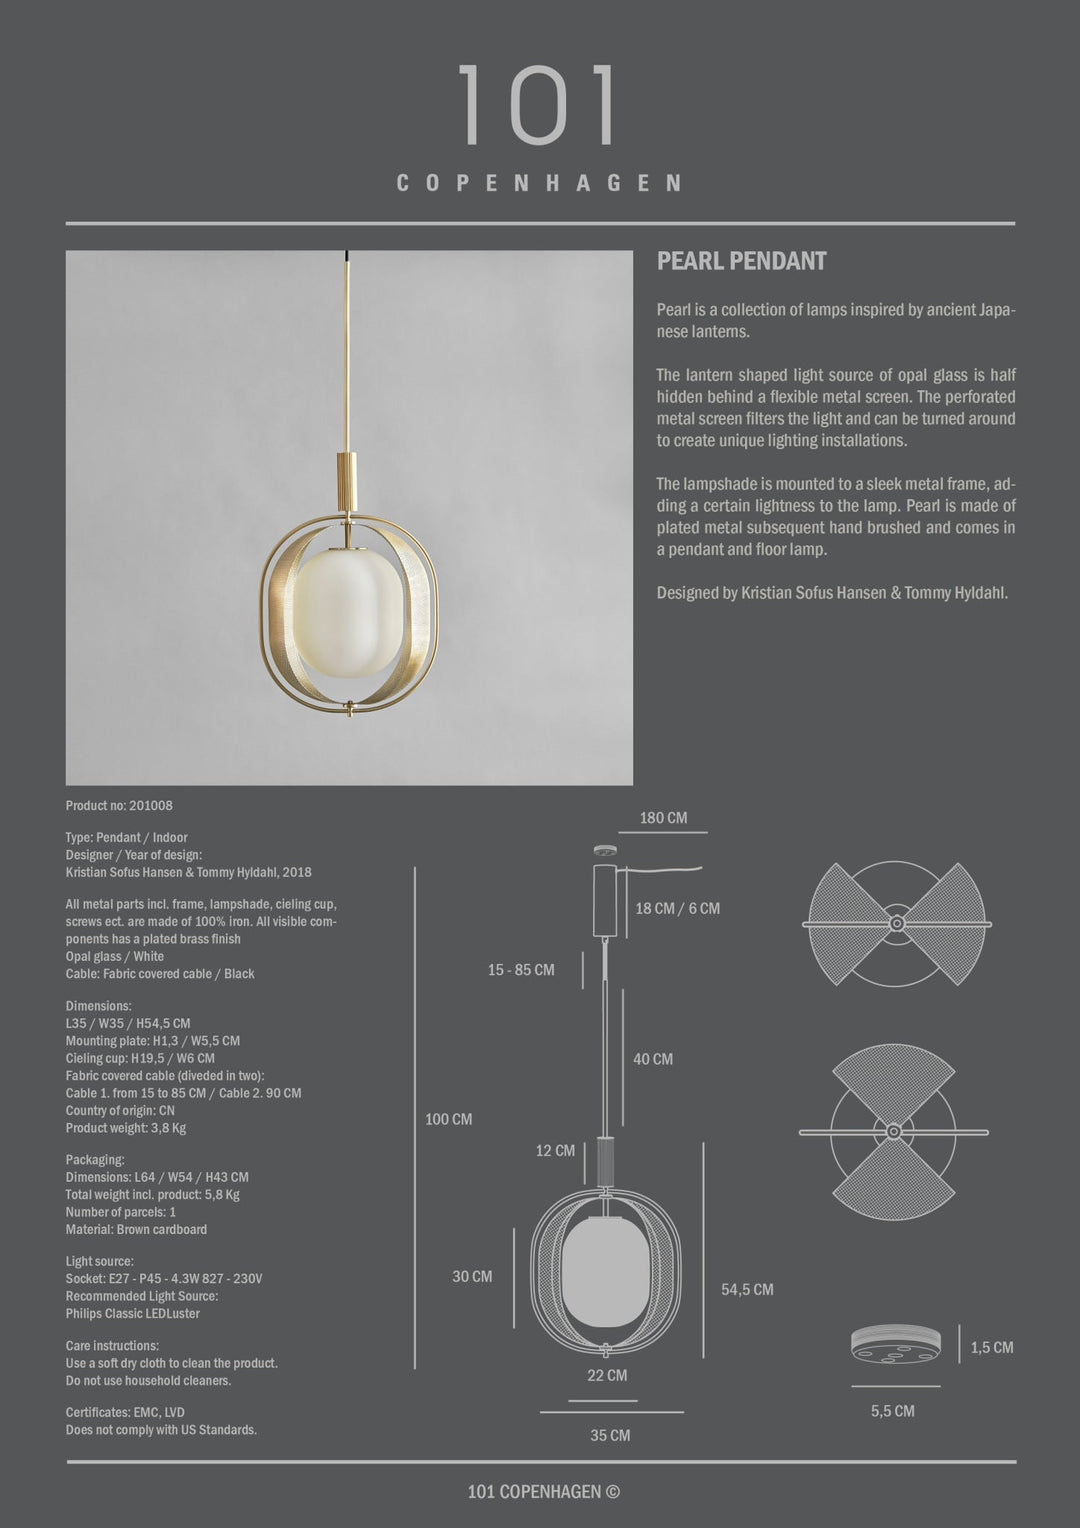 101 Copenhagen Pearl Pendant - Brass - $845.00